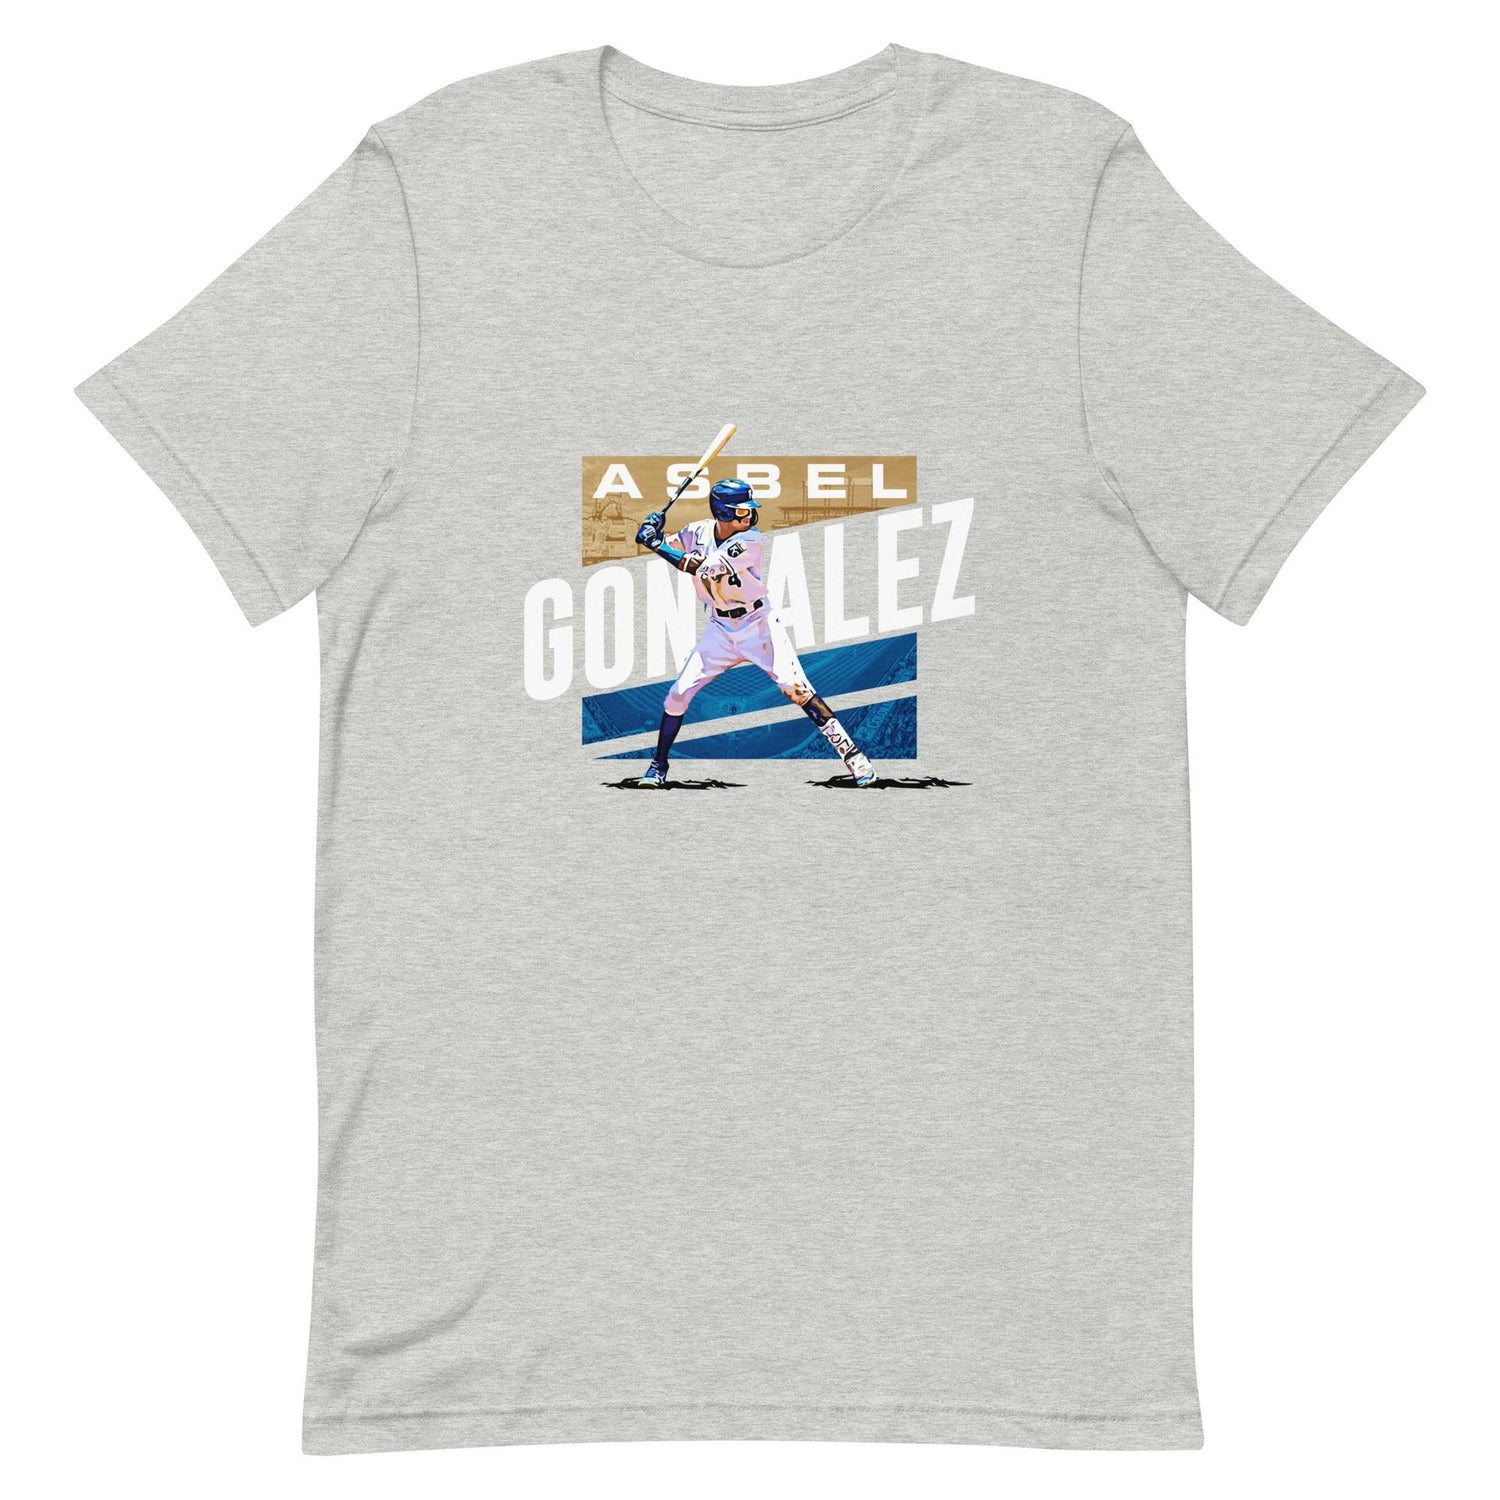 Asbel Gonzalez "Gameday" t-shirt - Fan Arch